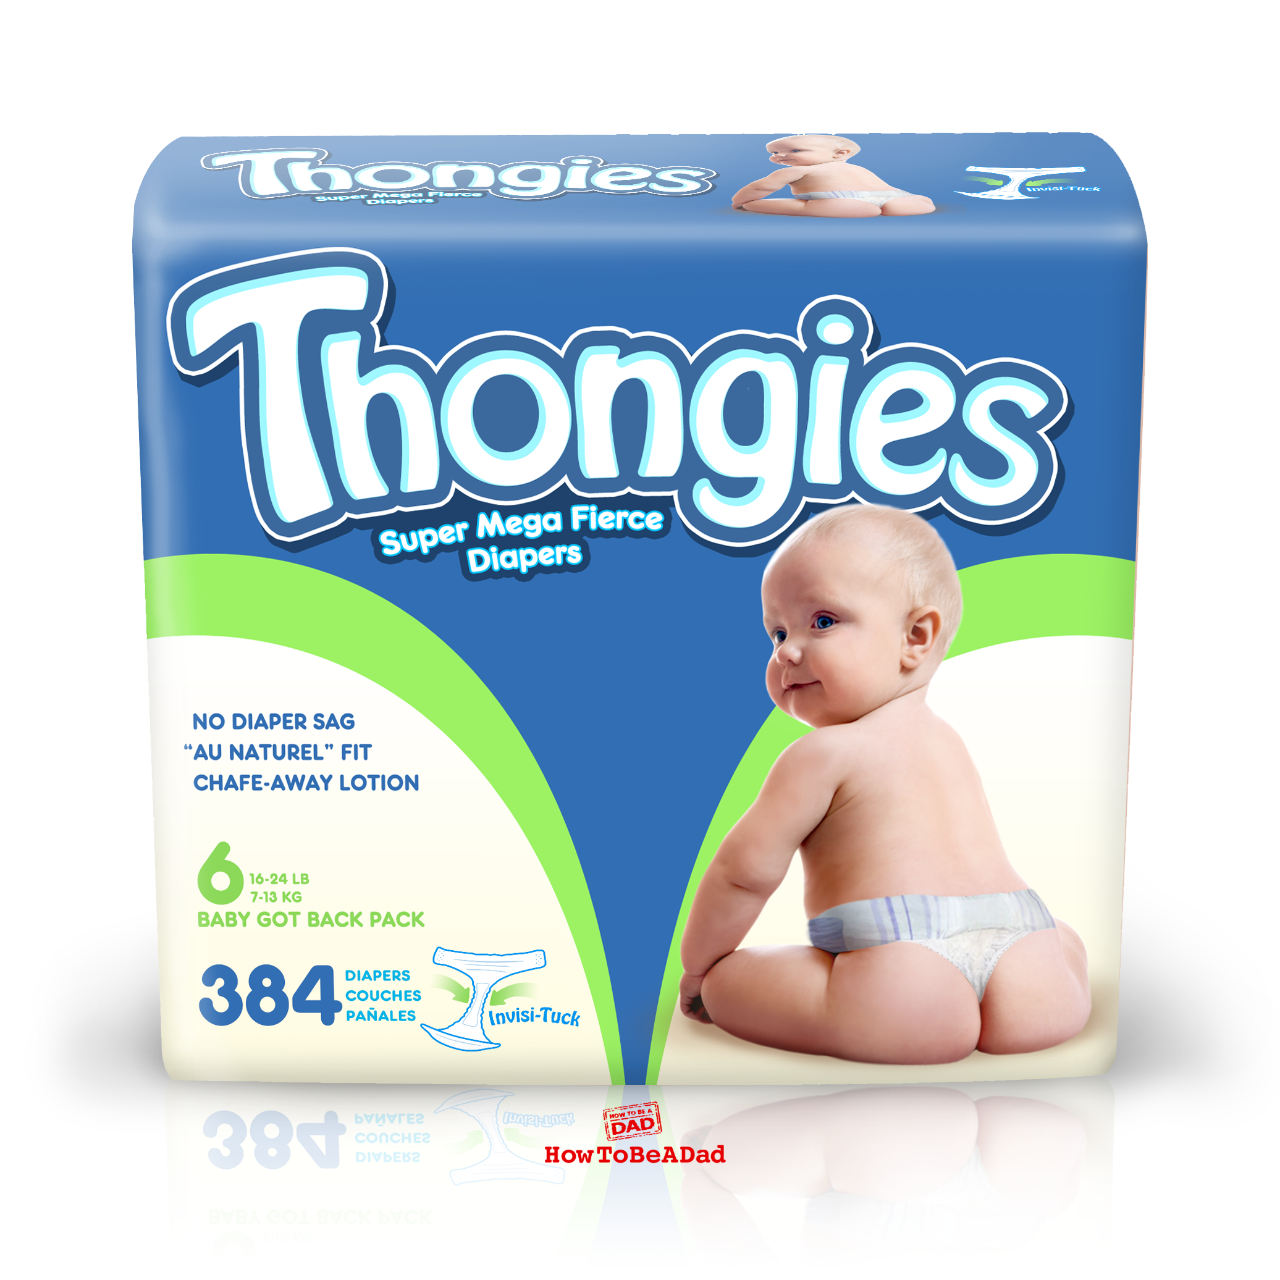 Thongies Diaper Thongs funny bad baby product